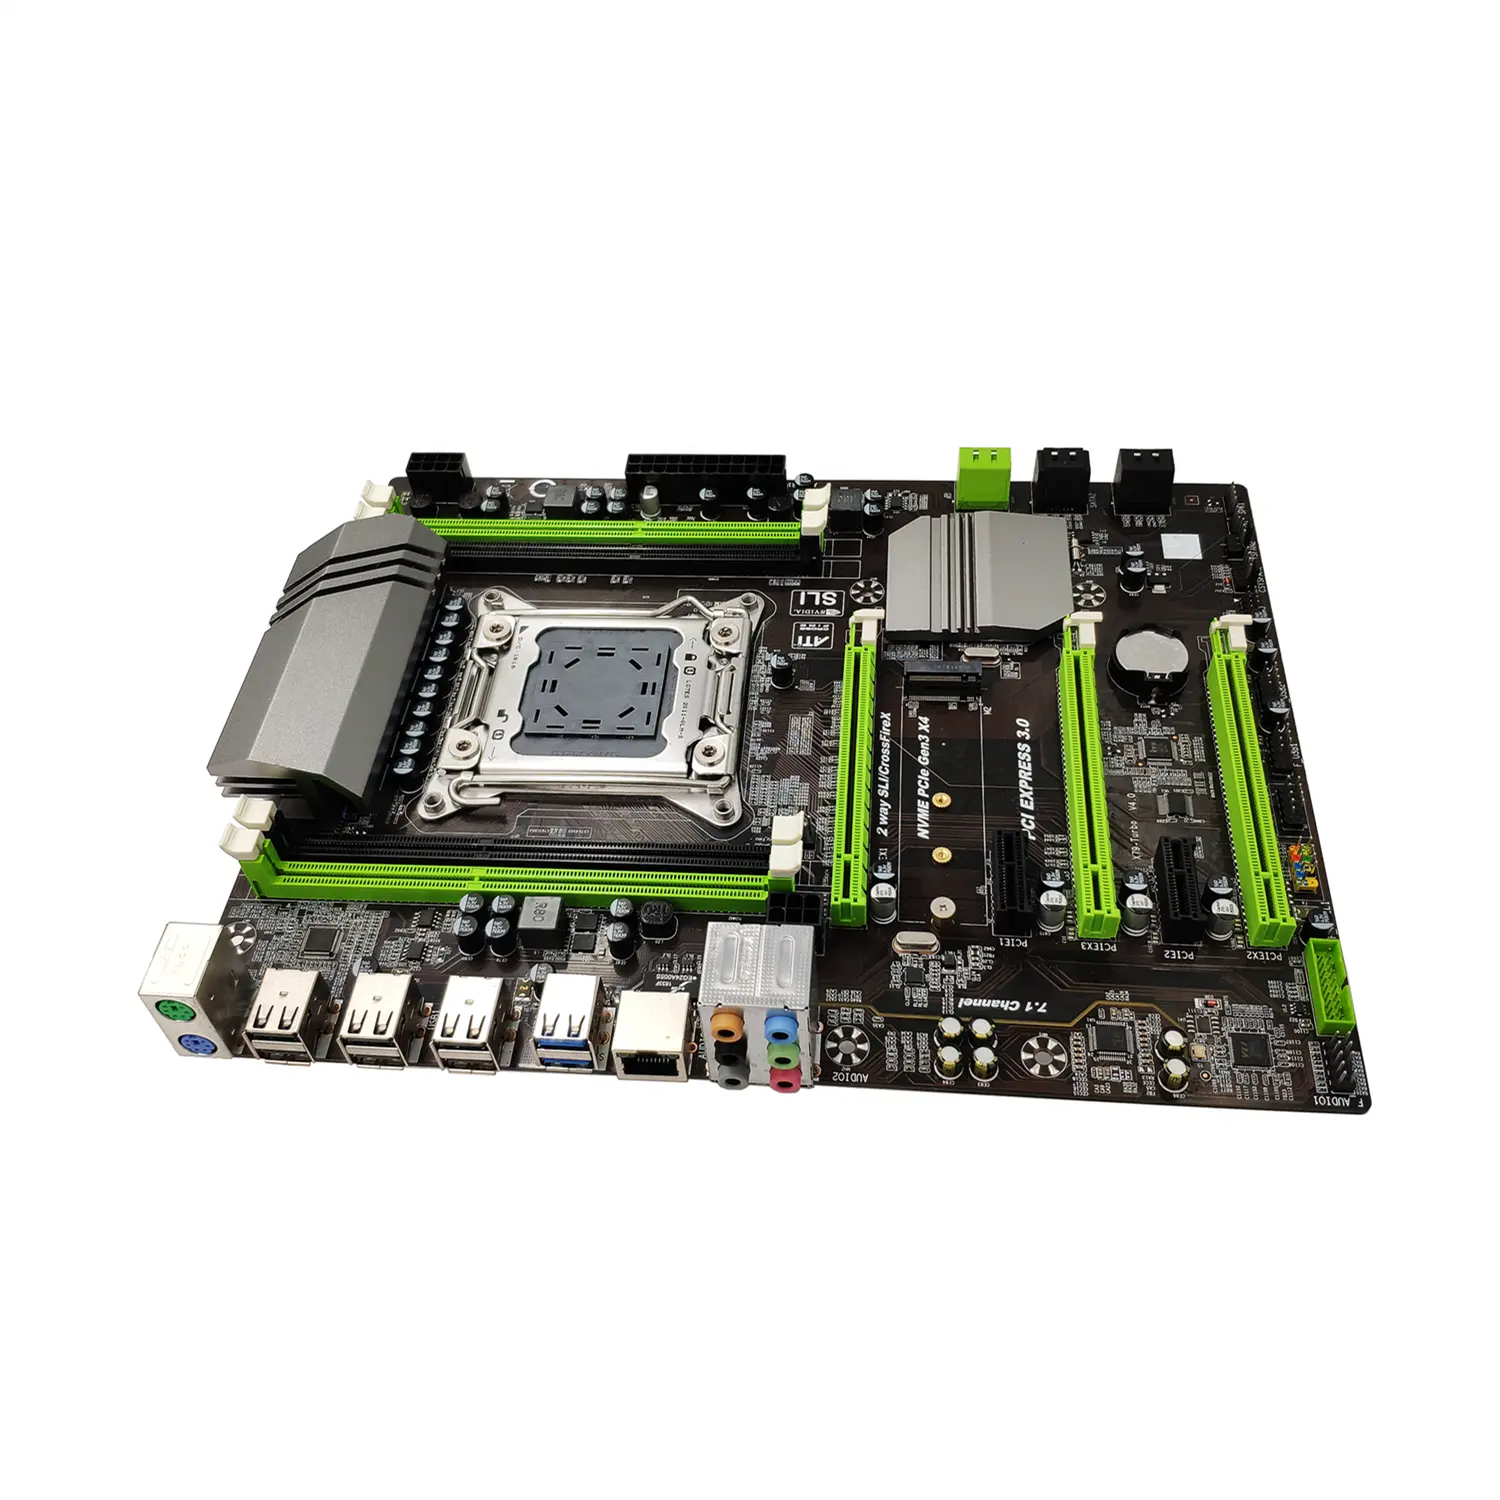 X79 motherboard LGA 2011 ATX USB3.0 SATA3 PCI-E NVME unterstützung 4*16g REG ECC speicher und Xeon E5 prozessor